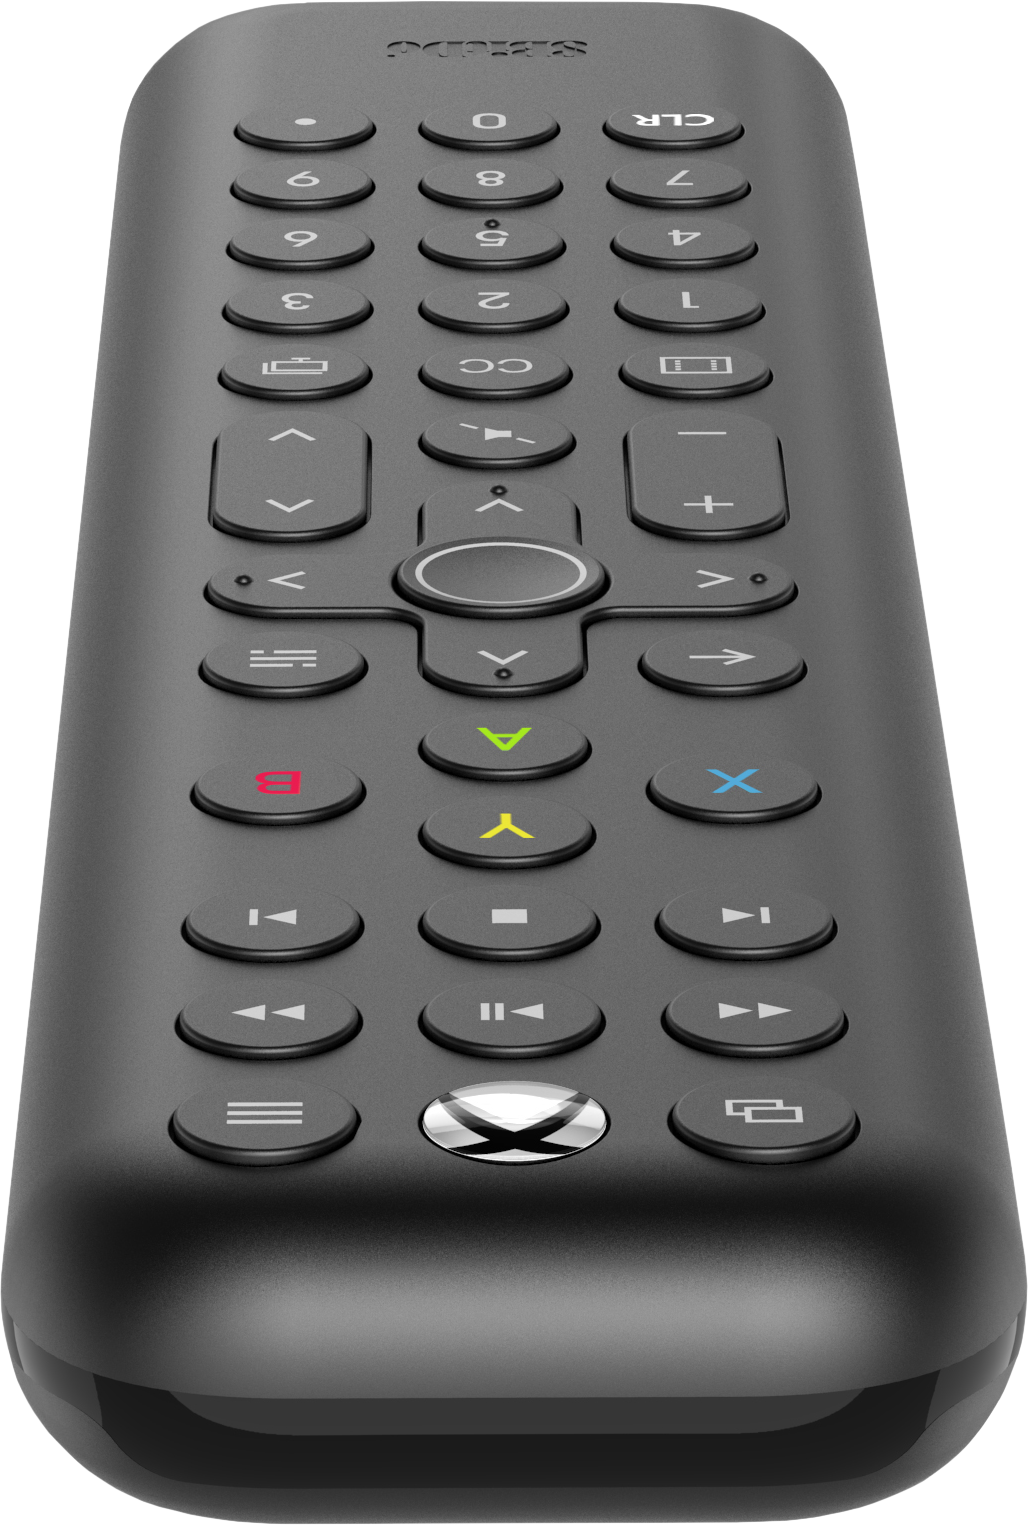 8BitDo Media Remote for Xbox-Long Edition